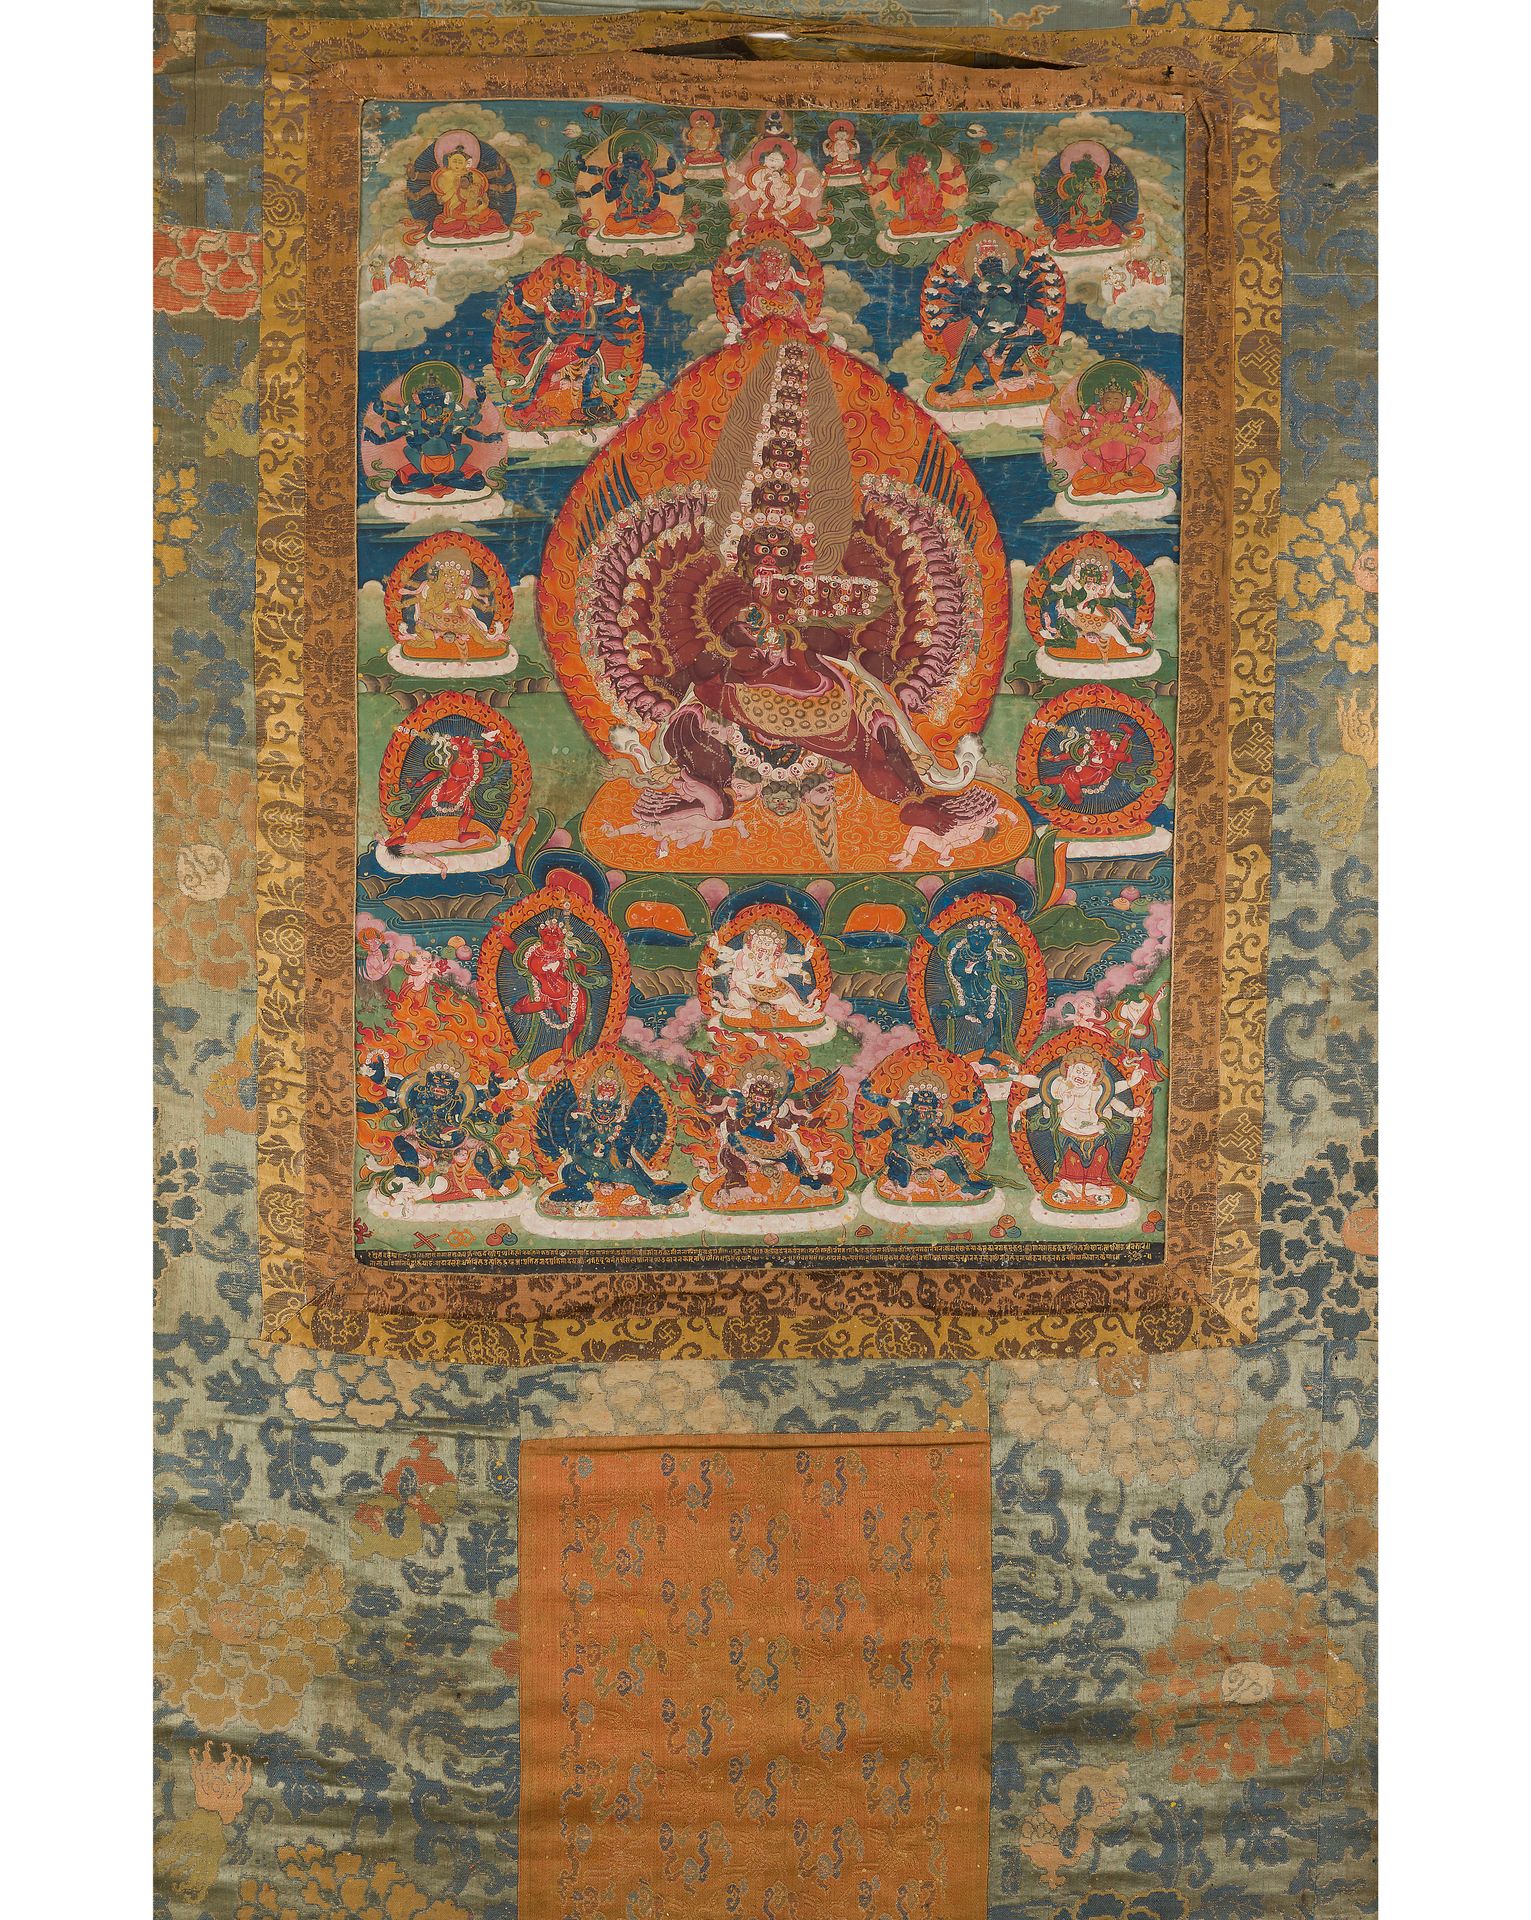 Null 一幅表现凯姆乔克-赫鲁卡的唐卡。

西藏，18世纪末

织物，颜料，原样

140 x 86 cm



出处 ：

纳丁-维诺-波斯特里收藏，巴黎。